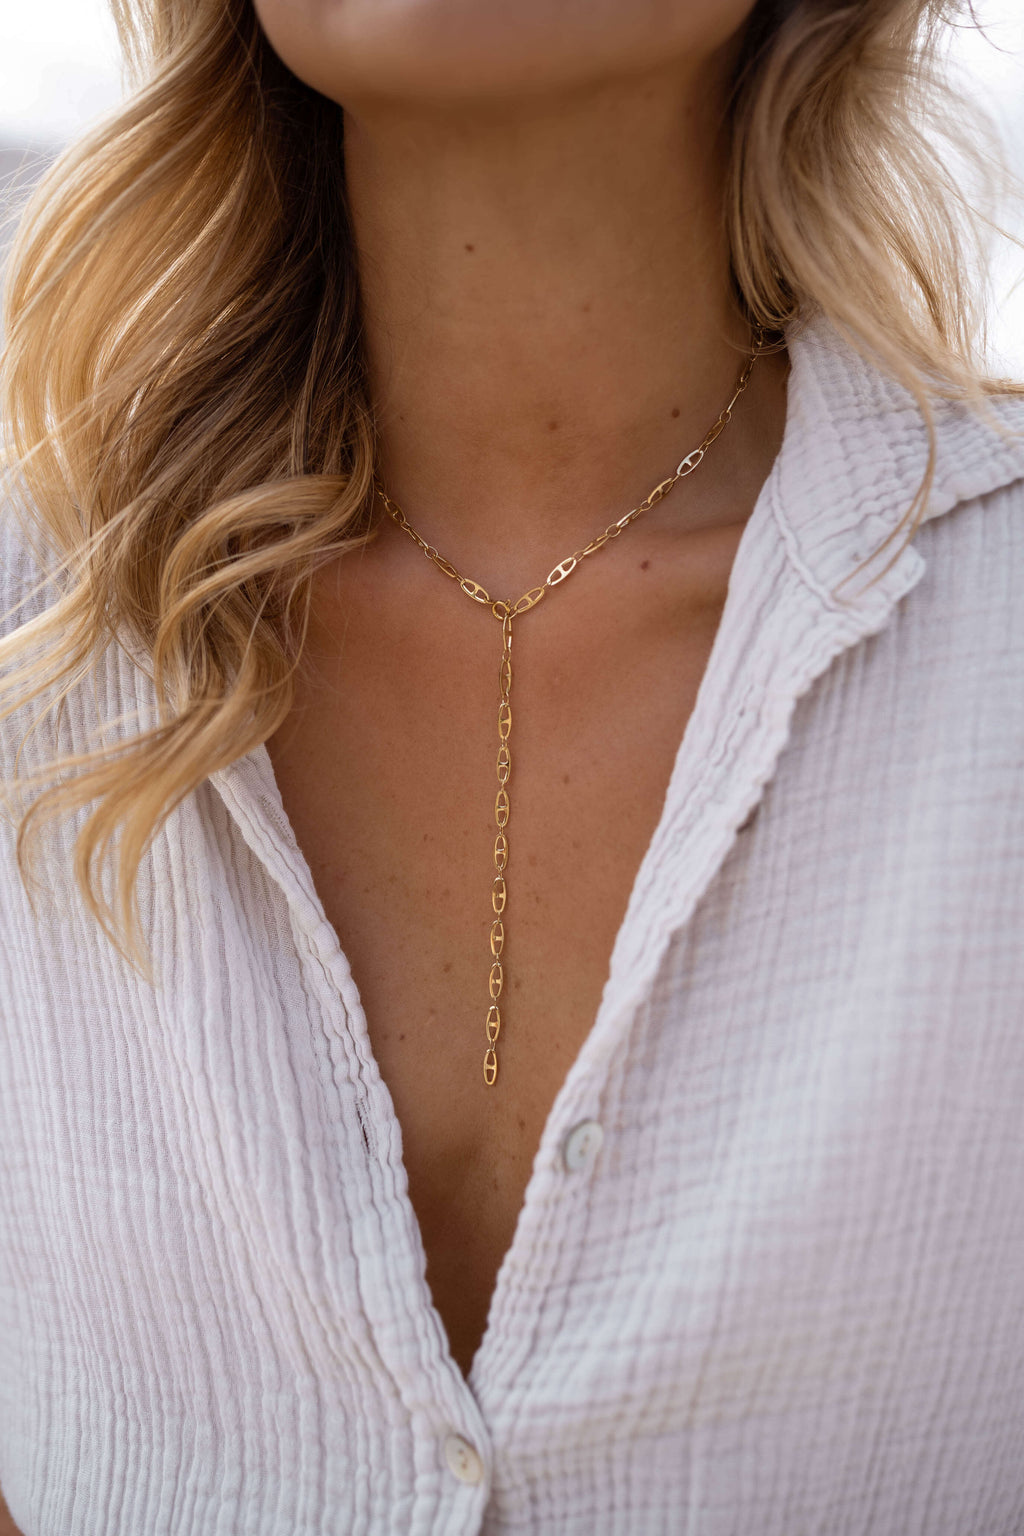 Isaac necklace - Golden